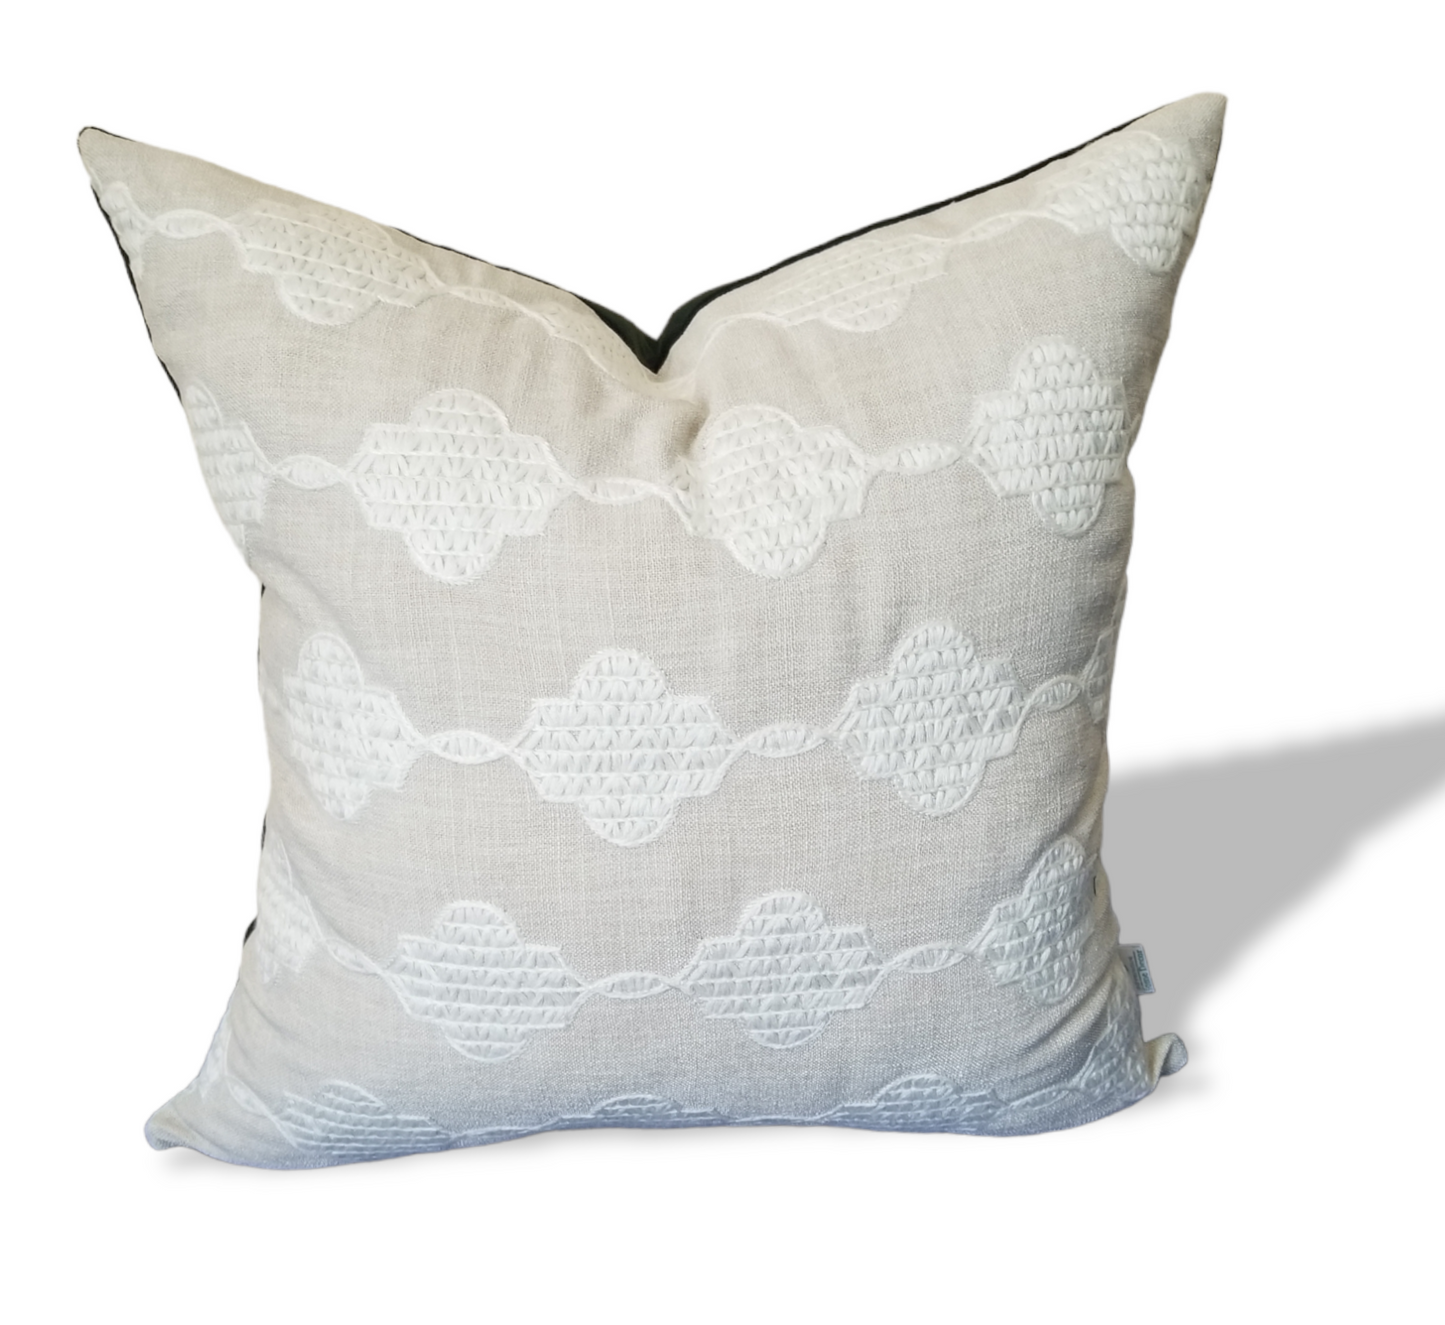 P kaufmann Jacqueline Emerald Embroidered Decorative Pillow Cover